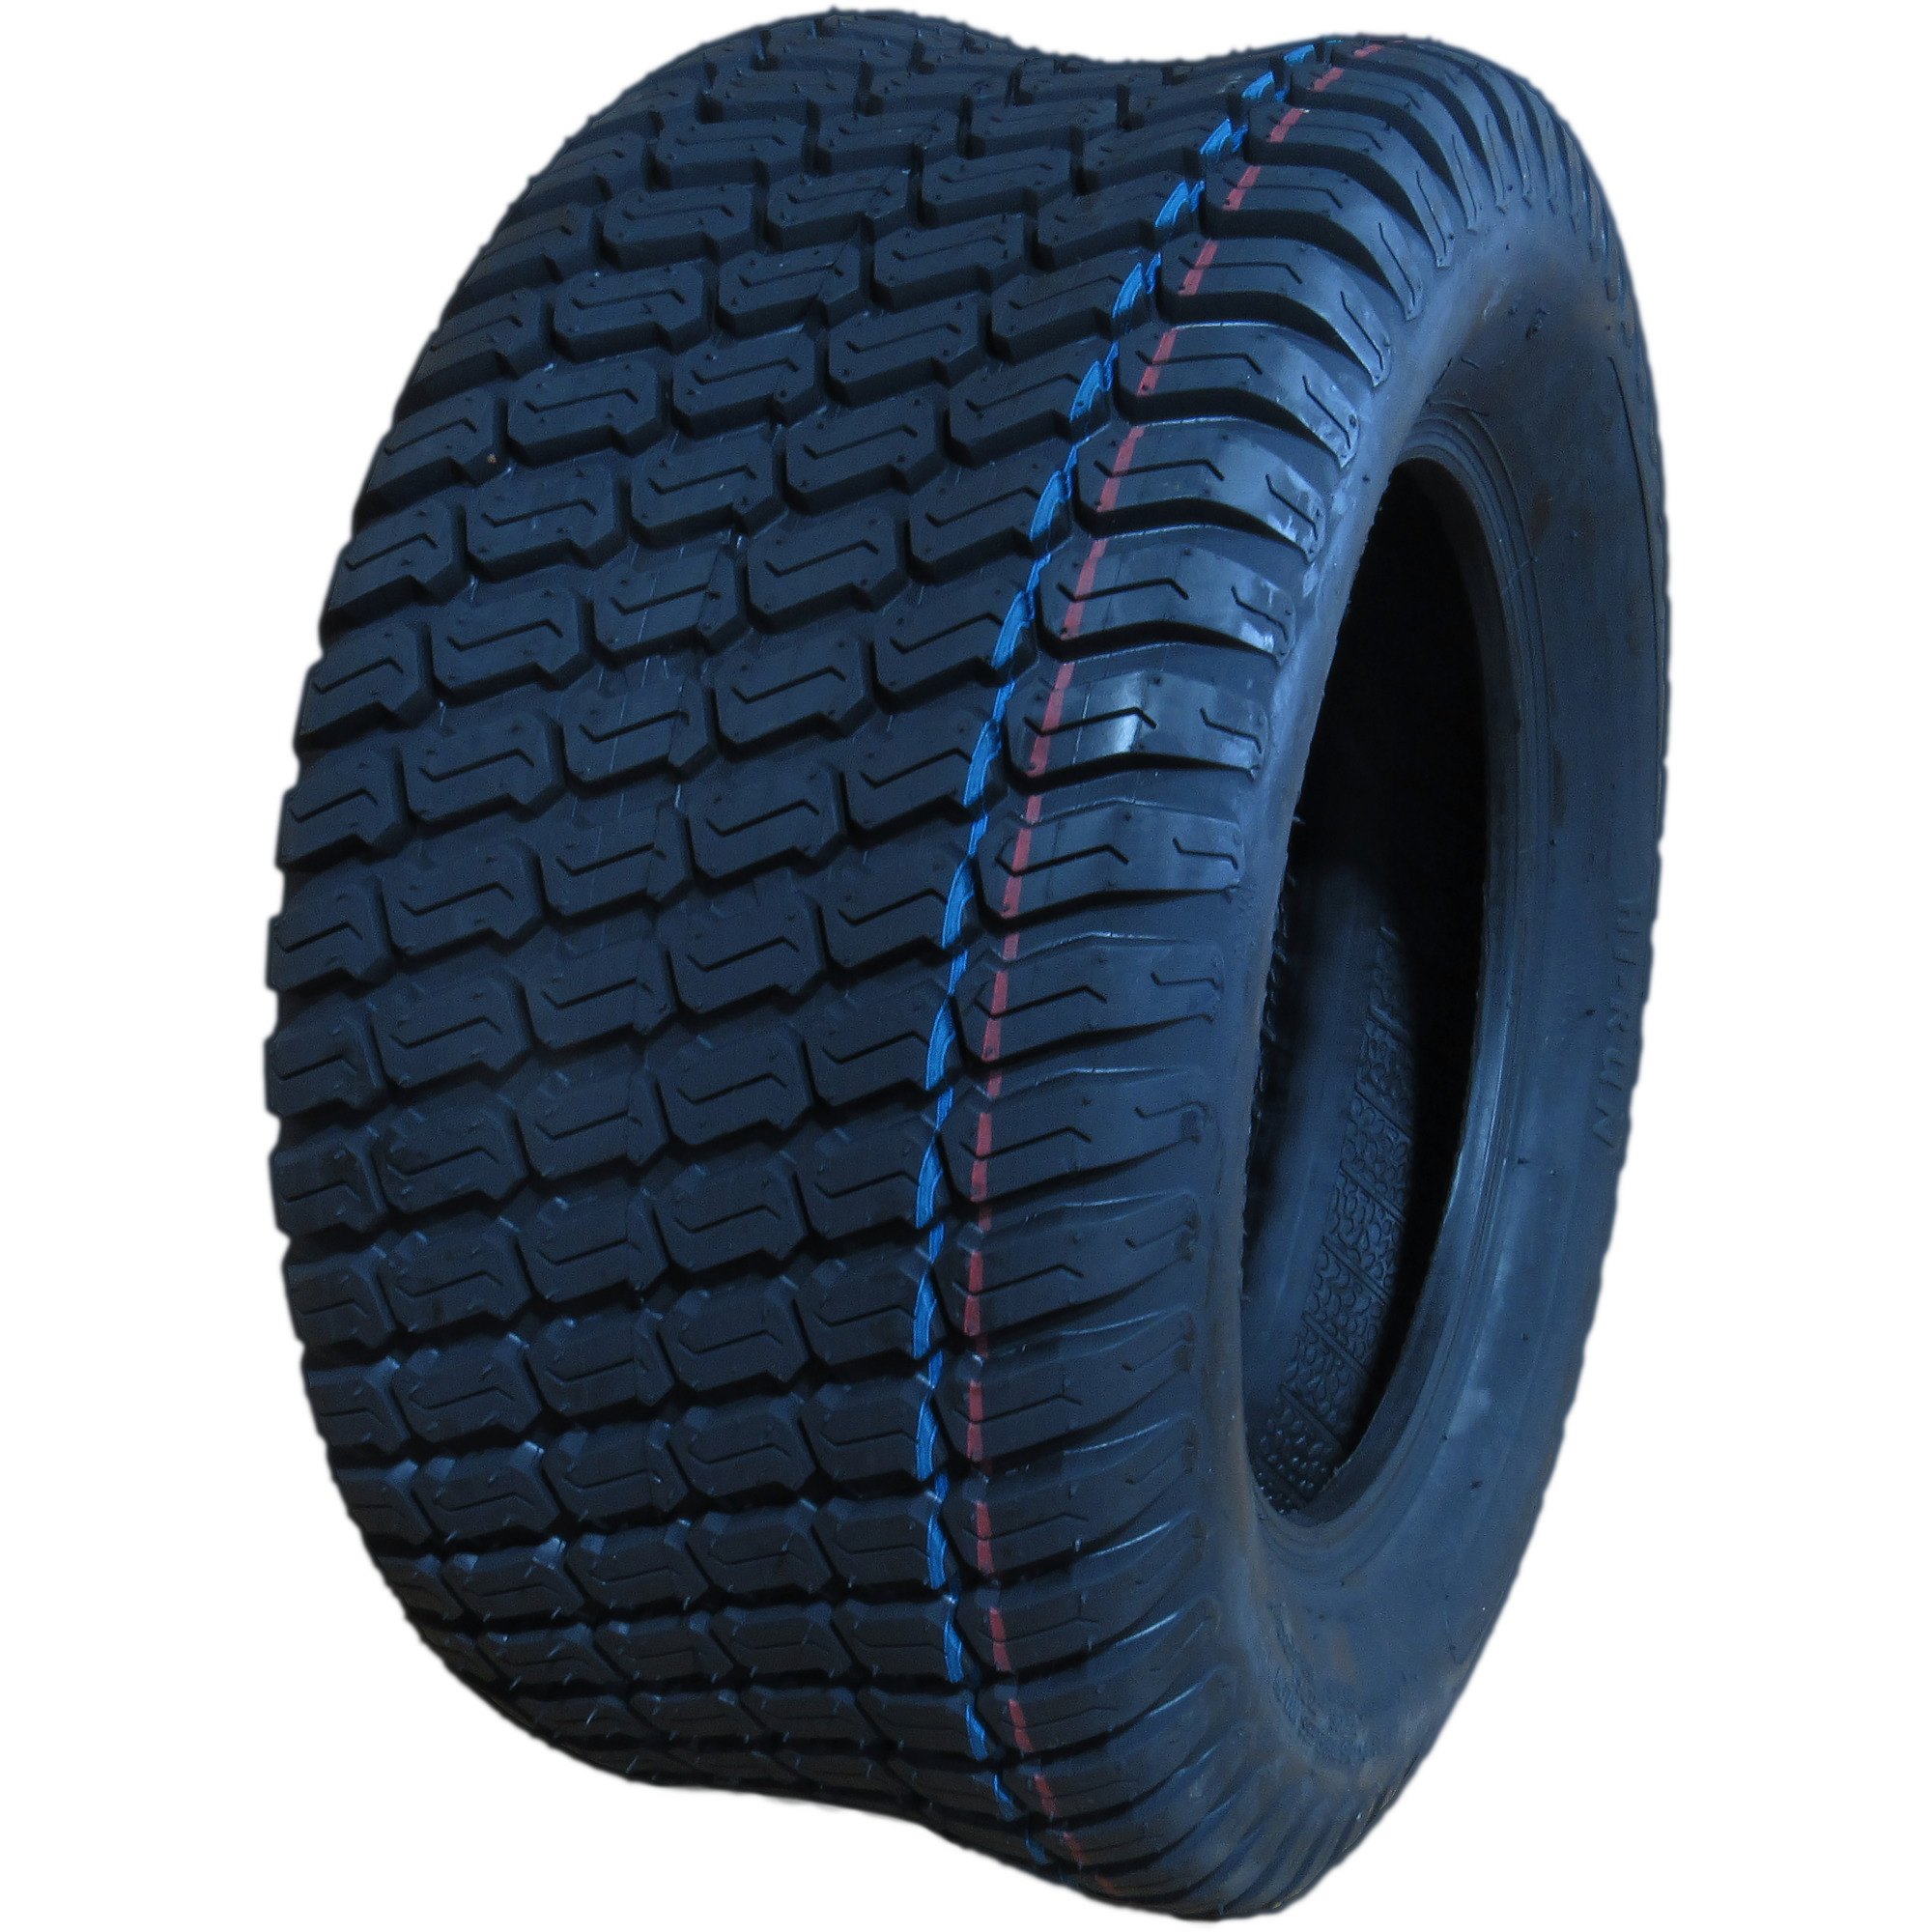 HI-RUN, Lawn Garden Tire, SU05 Turf, Tire Size 18X8.50-10 Load Range Rating B, Model WD1132